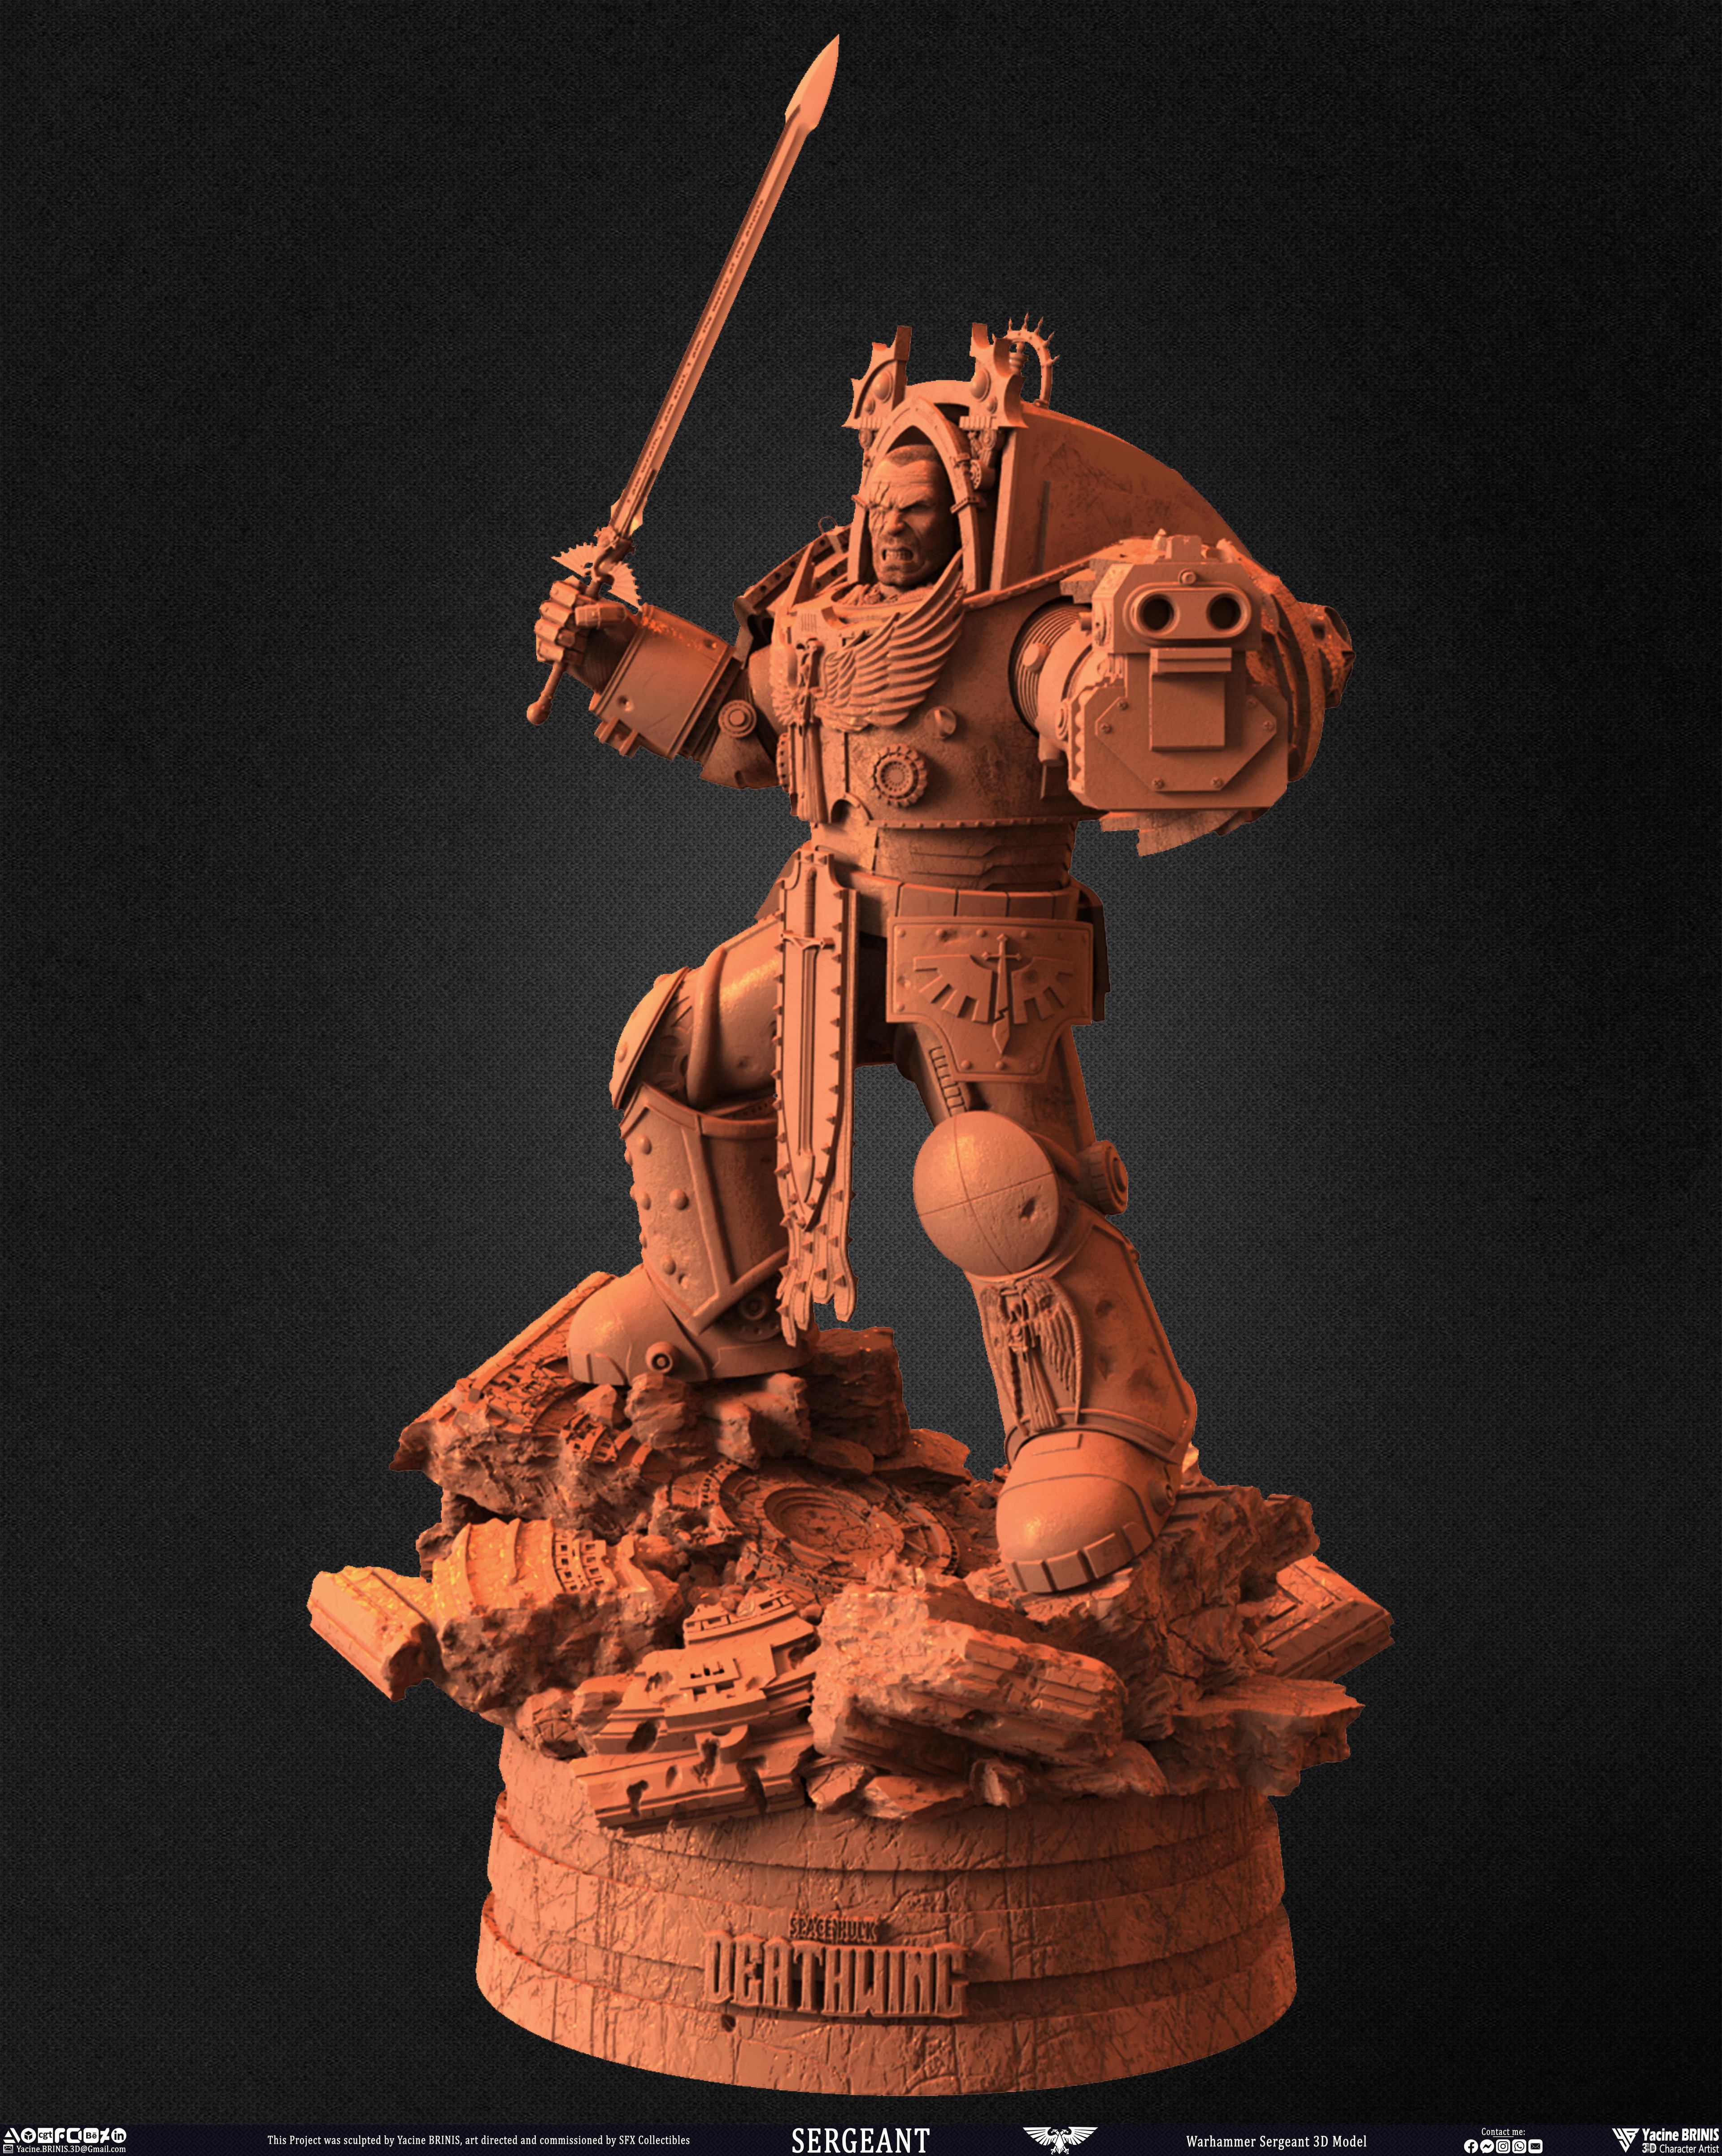 Warhammer Sergeant sculpted by Yacine BRINIS 020